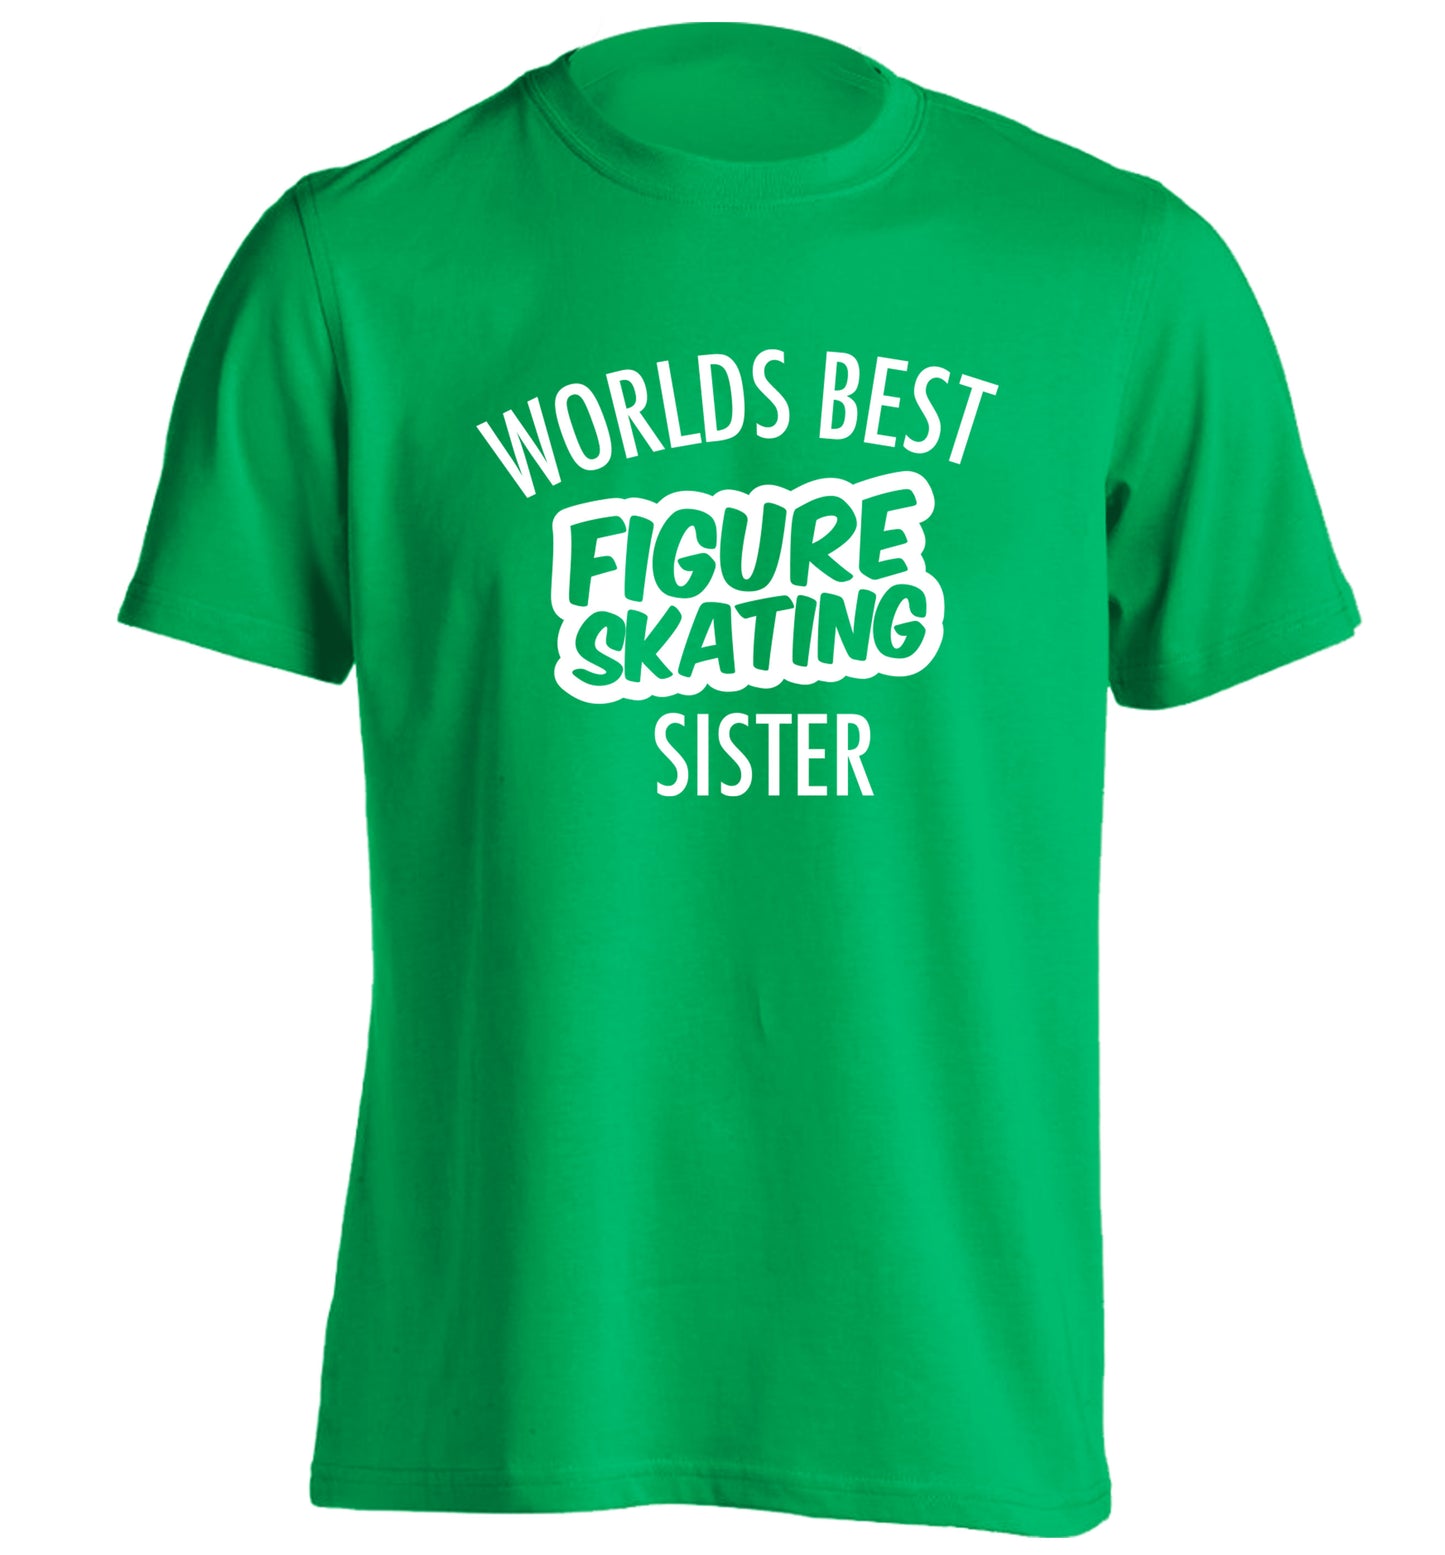 Worlds best figure skating sisteradults unisexgreen Tshirt 2XL